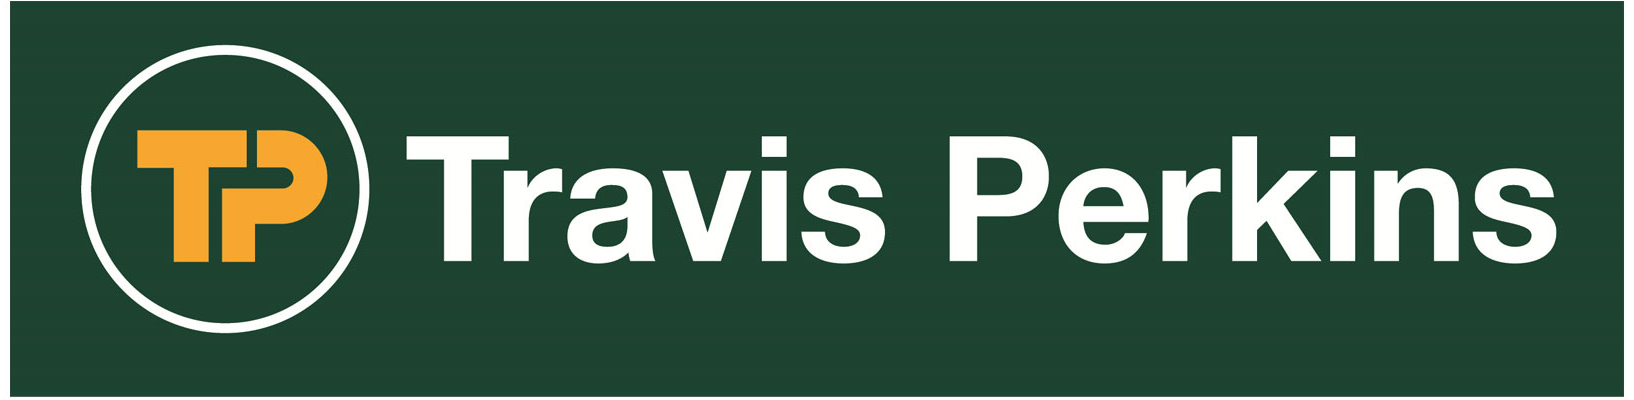 travis-perkins